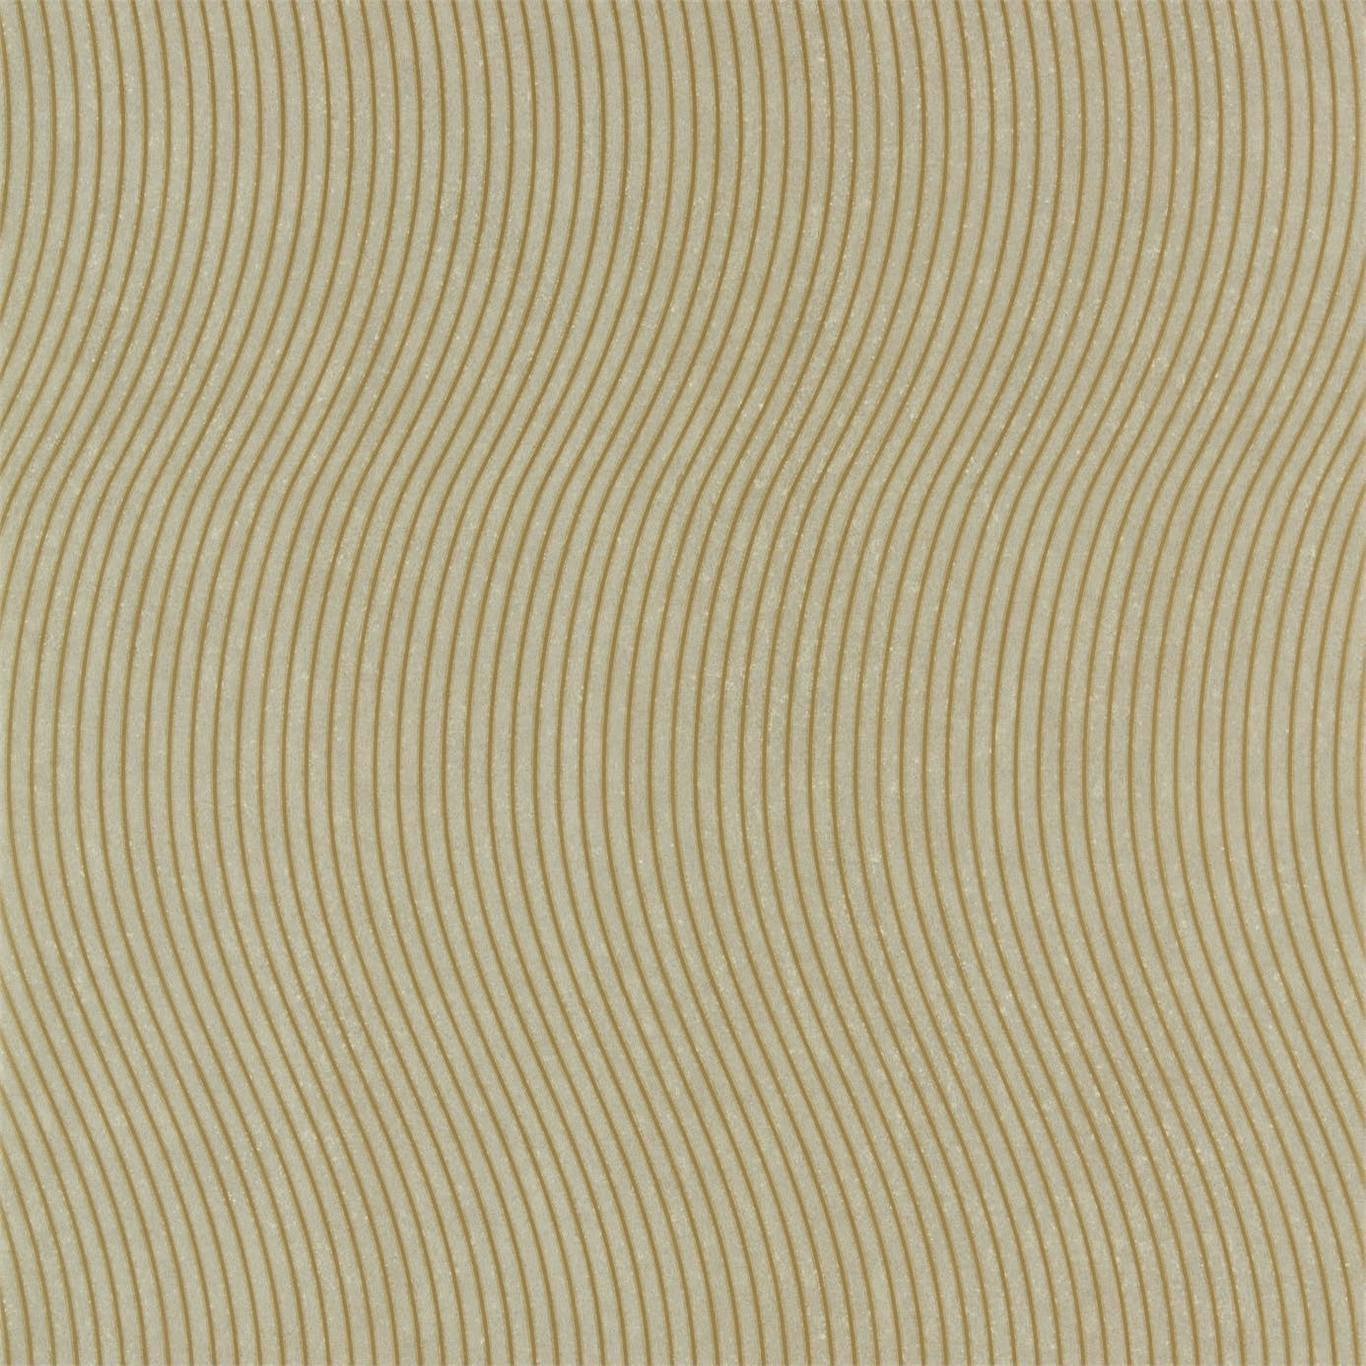 Anthology Groove Sandstone Wallpaper by HAR